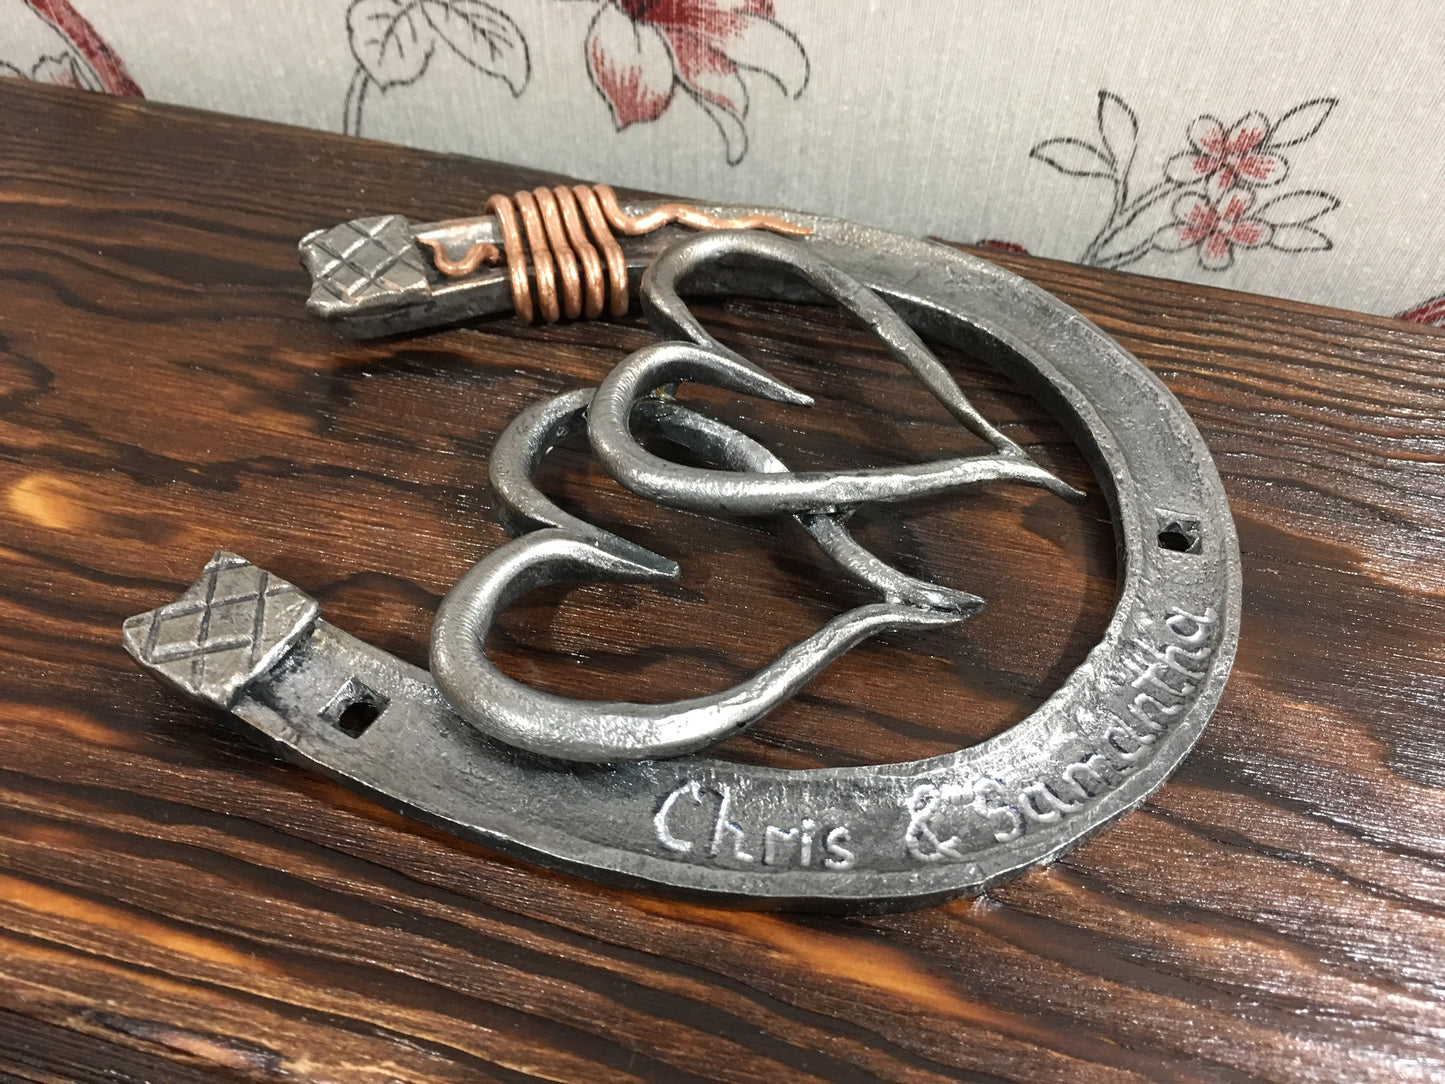 Iron horseshoe, 6th anniversary gift, iron anniversary, iron anniversary gift, iron gift,6th anniversary gift for her,iron hearts,iron gifts